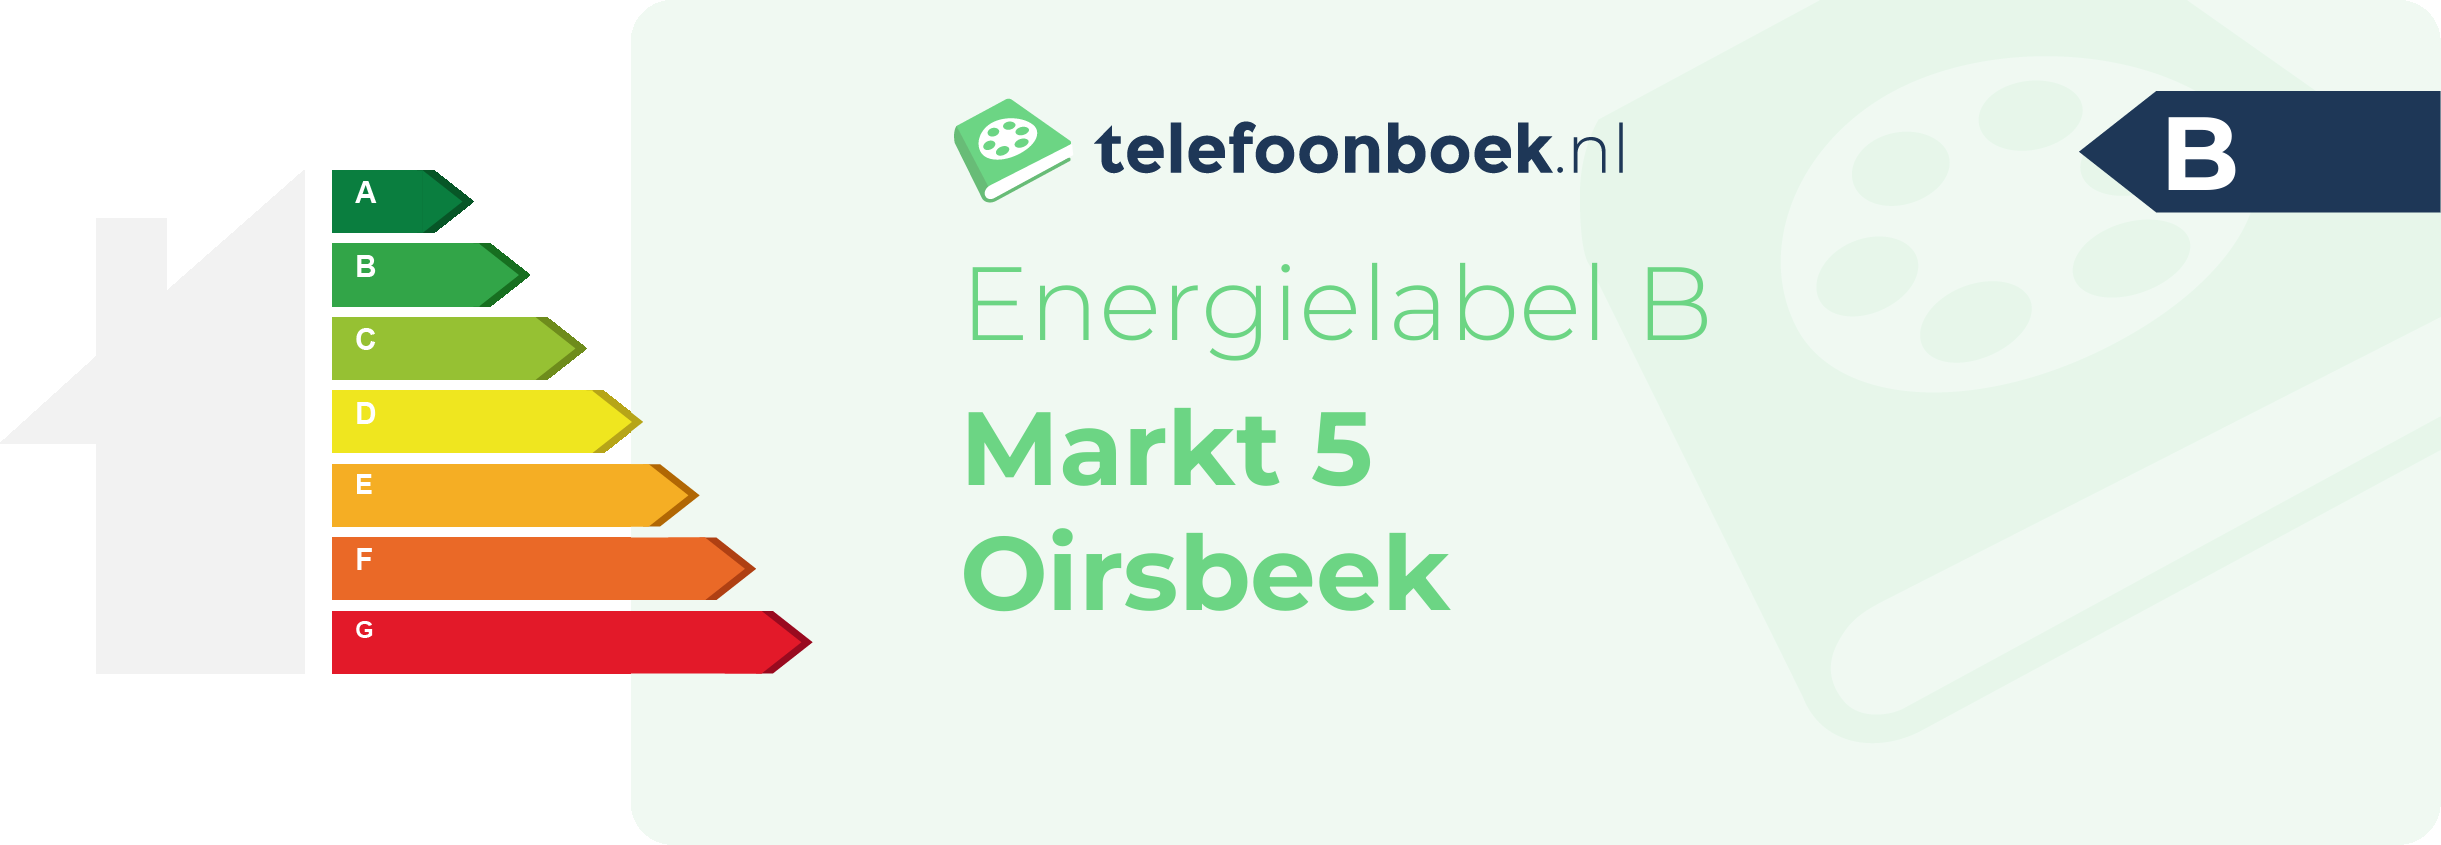 Energielabel Markt 5 Oirsbeek